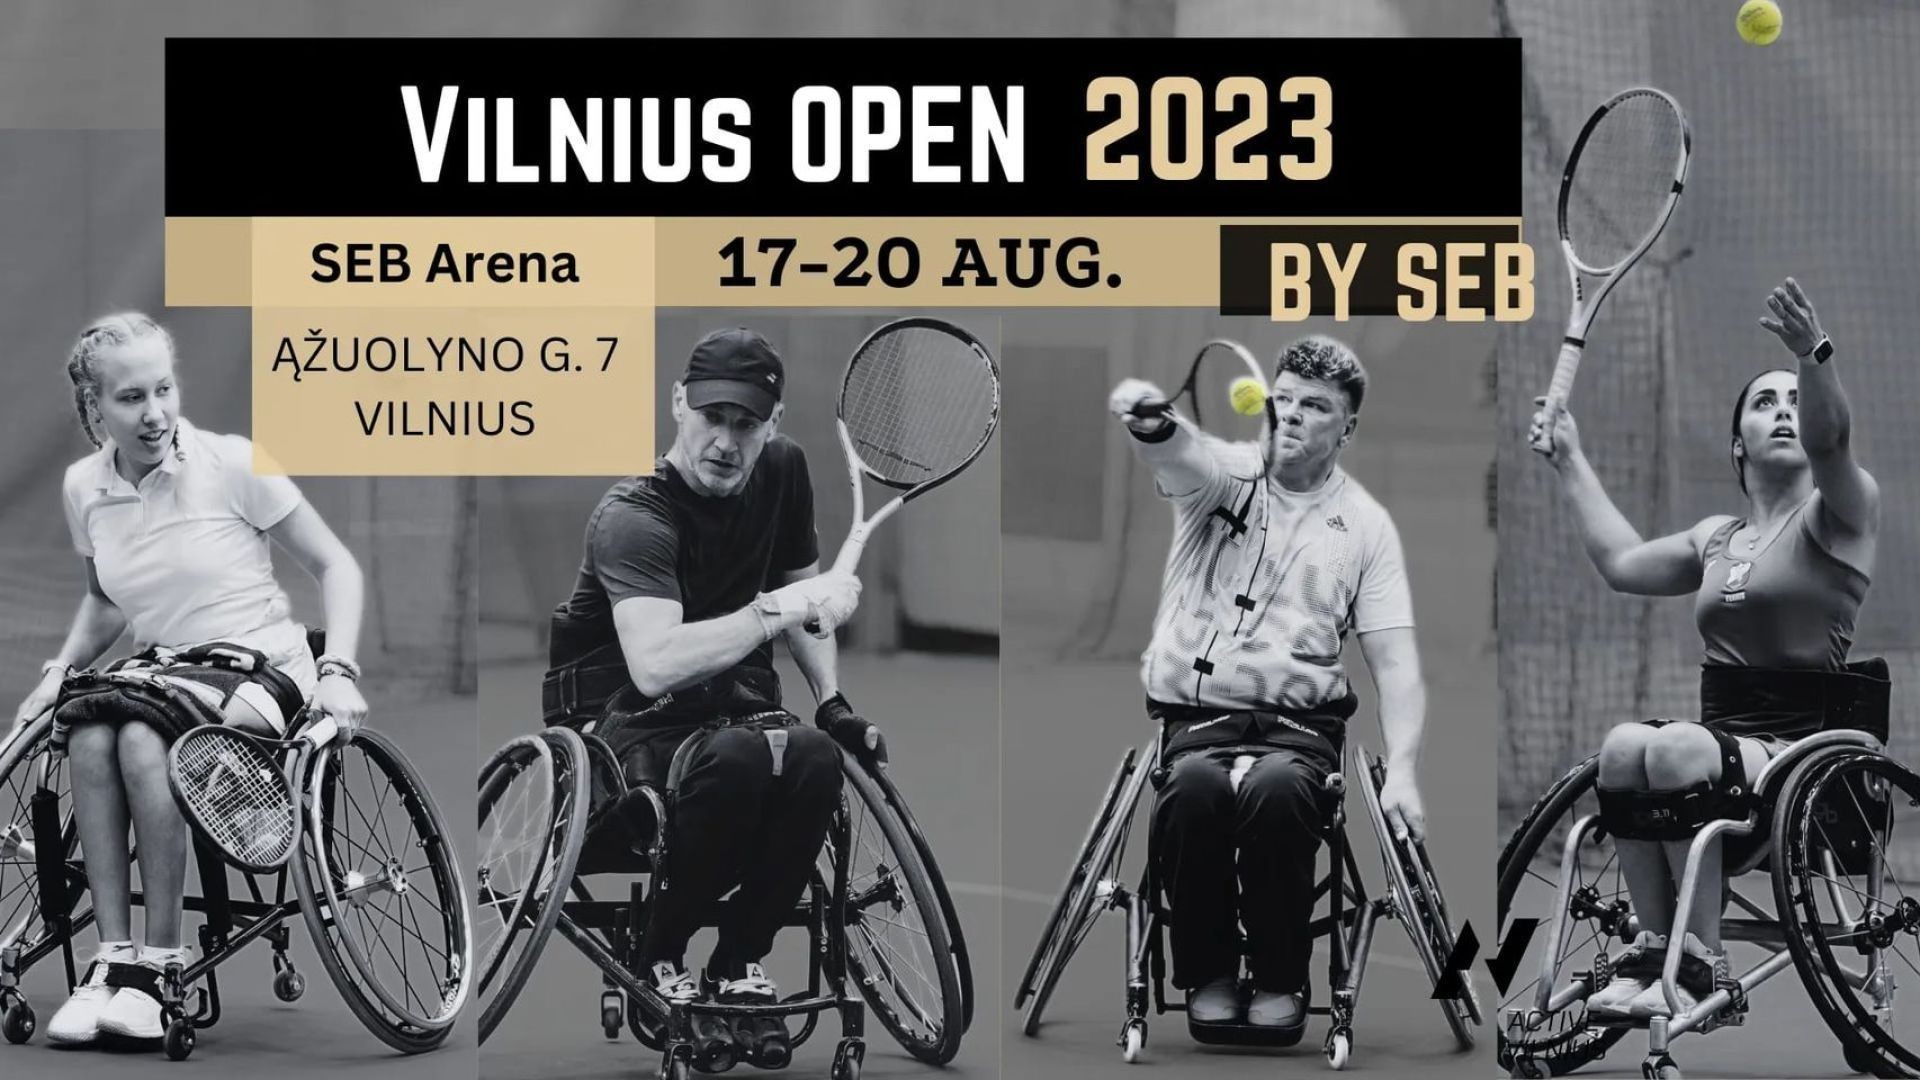 COURT 9 DAY 4 - VILNIIUS OPEN 2023 BY SEB